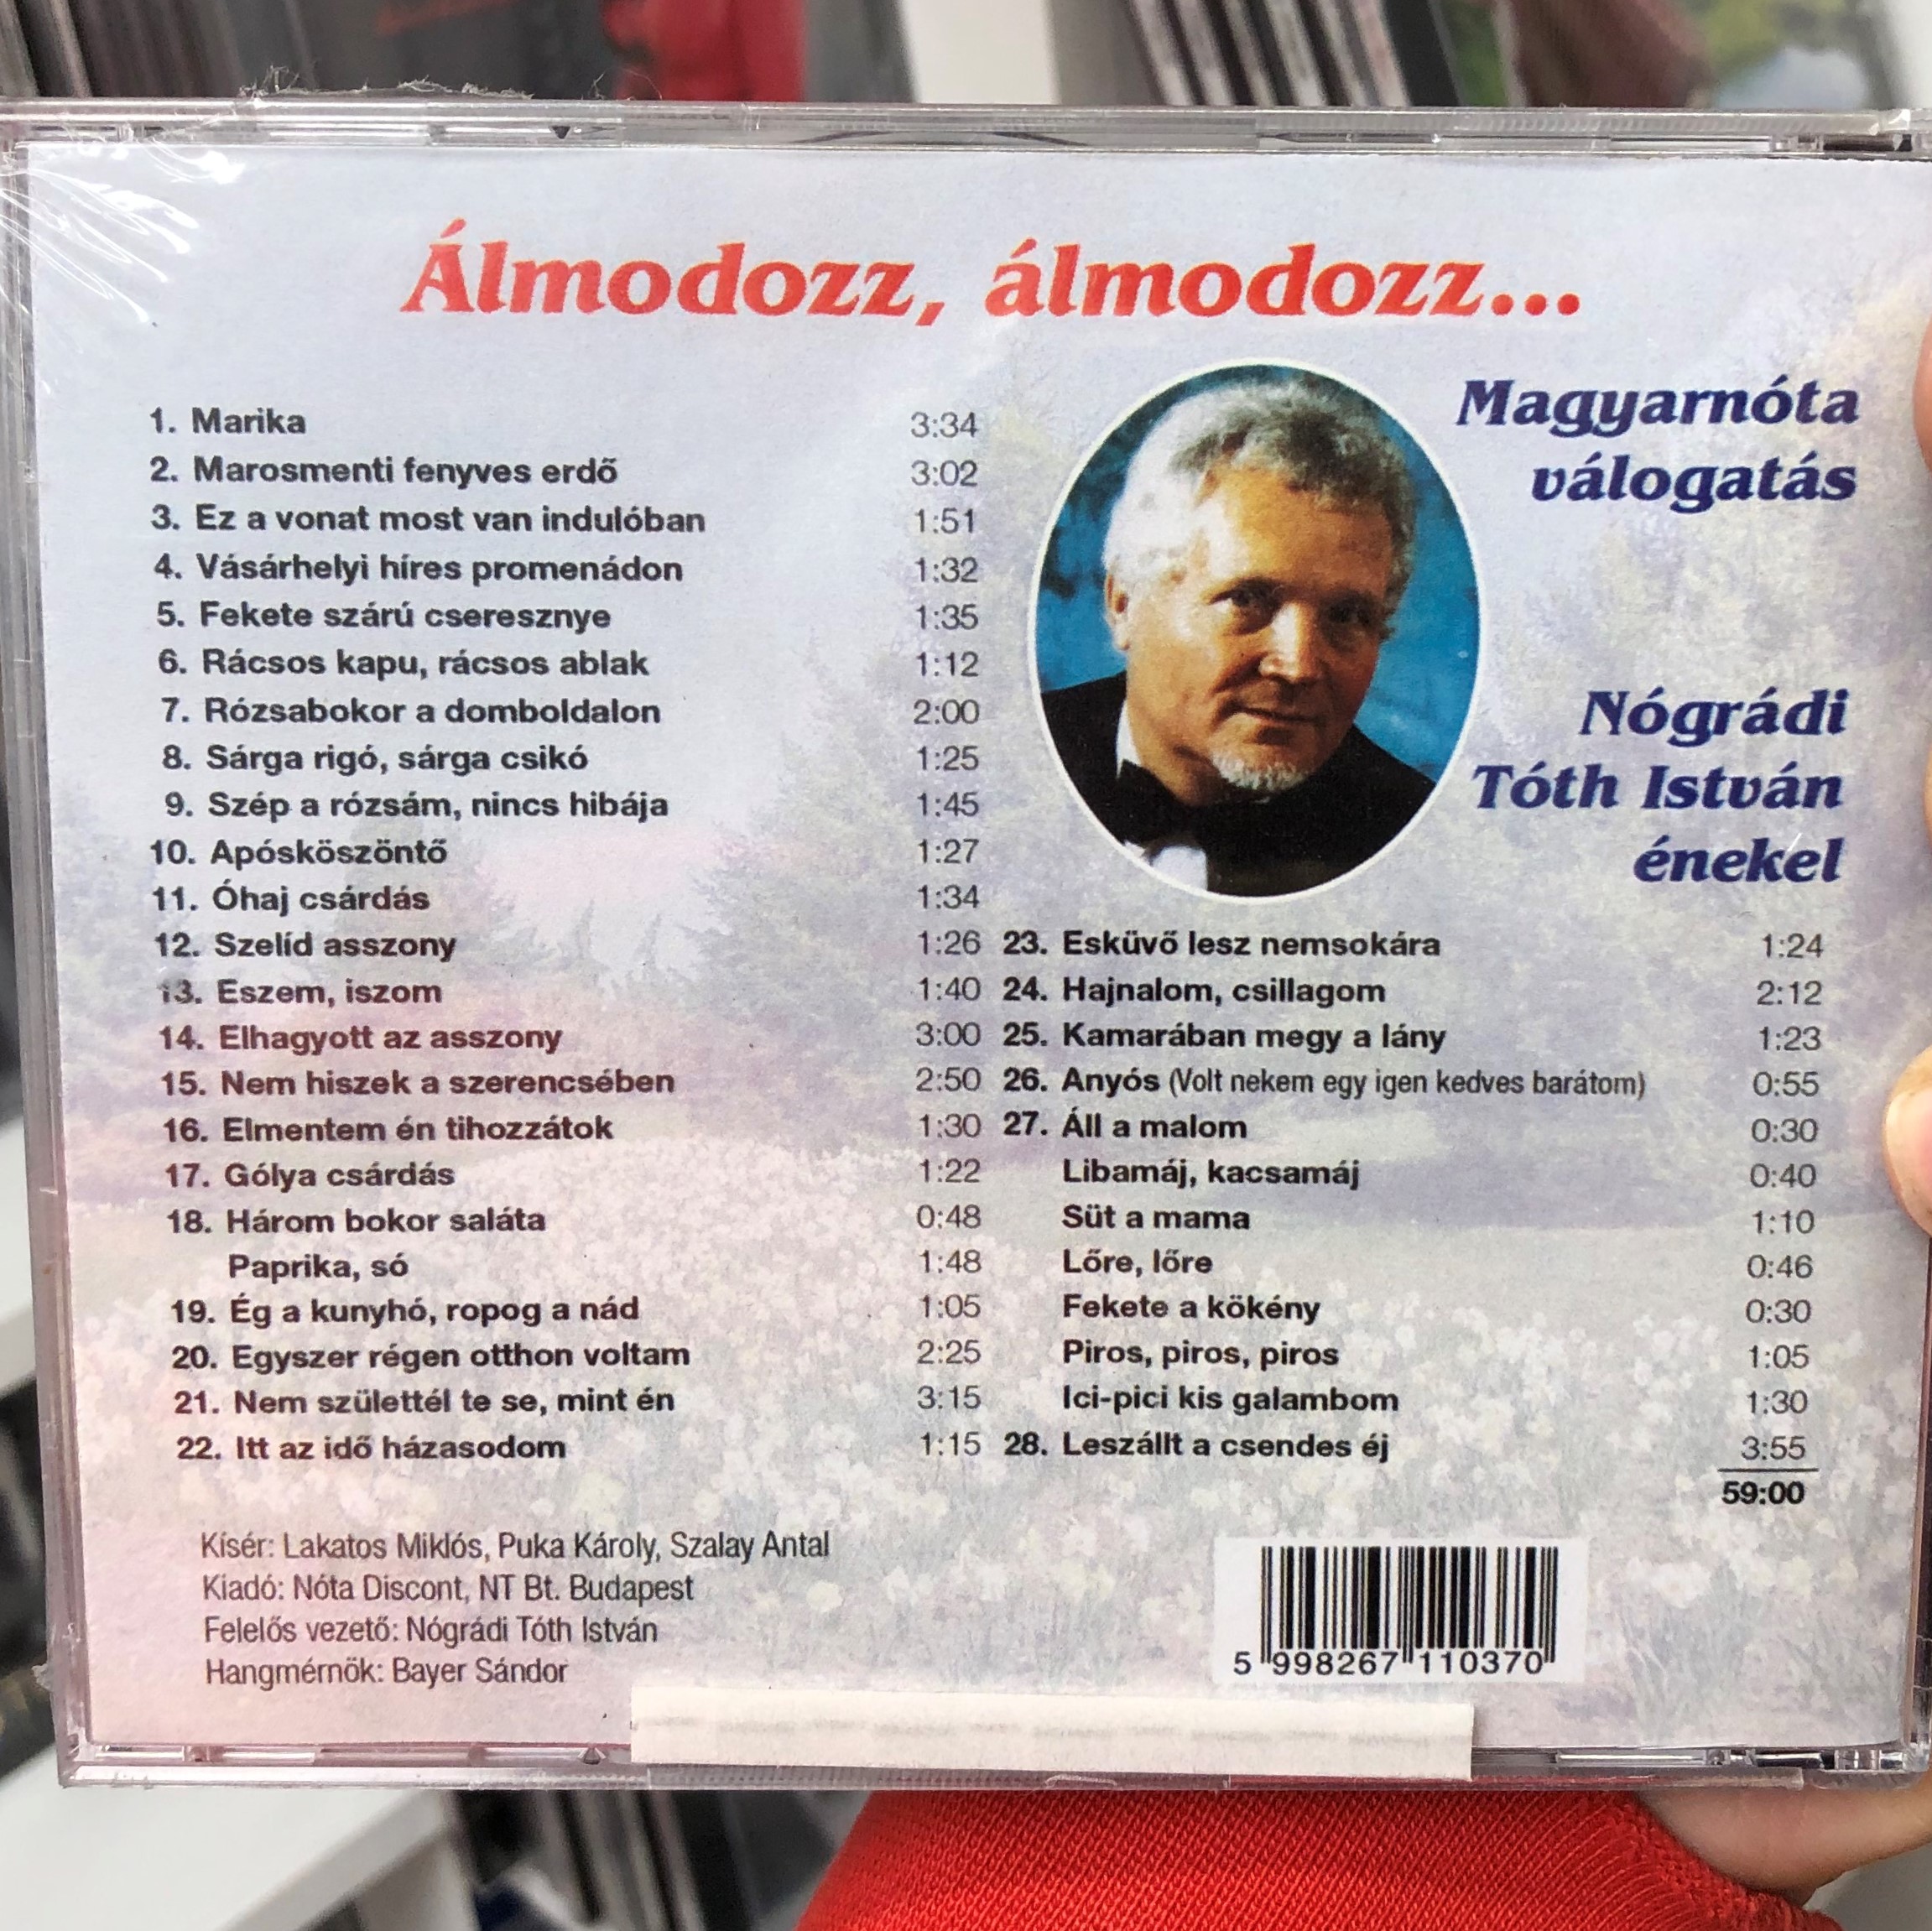 almodozz-almodozz...-magyarnota-valogatas-nogradi-toth-istvan-enekel-nota-discont-audio-cd-5998267110370-2-.jpg